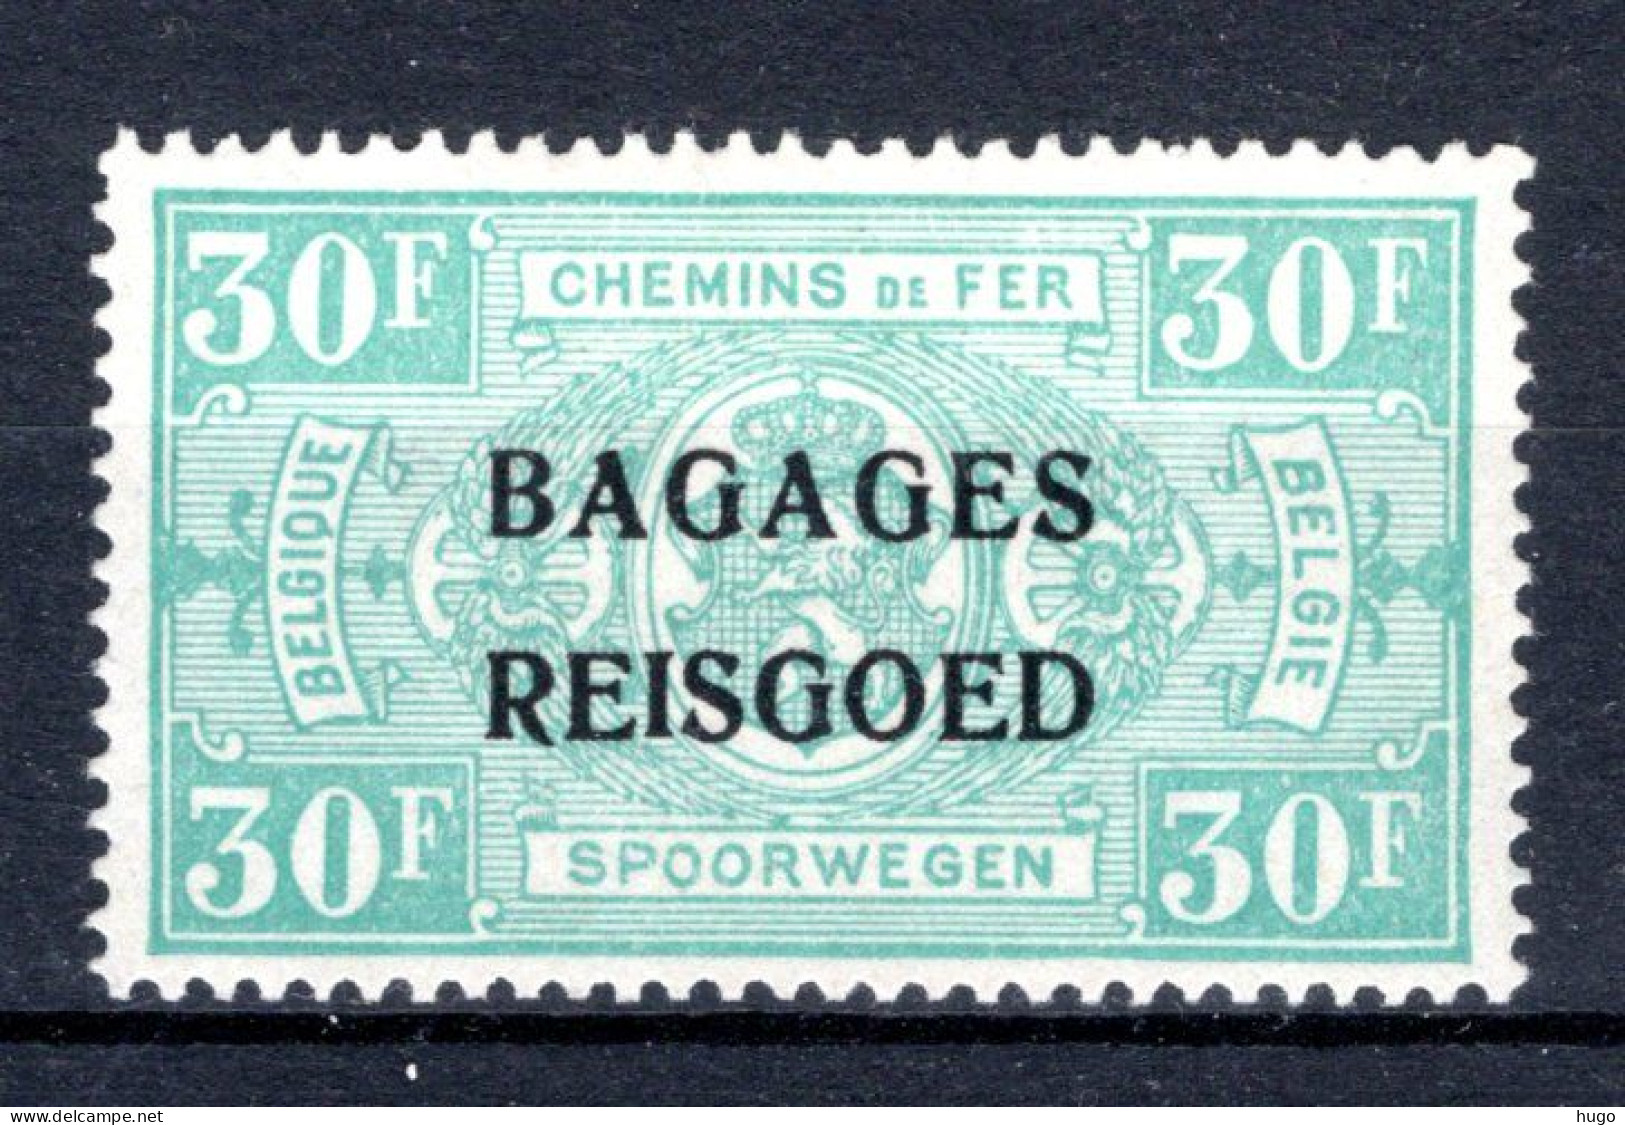 BA21 MH* 1935 - Spoorwegzegels Met Opdruk "BAGAGES - REISGOED" - Sot - Bagagli [BA]